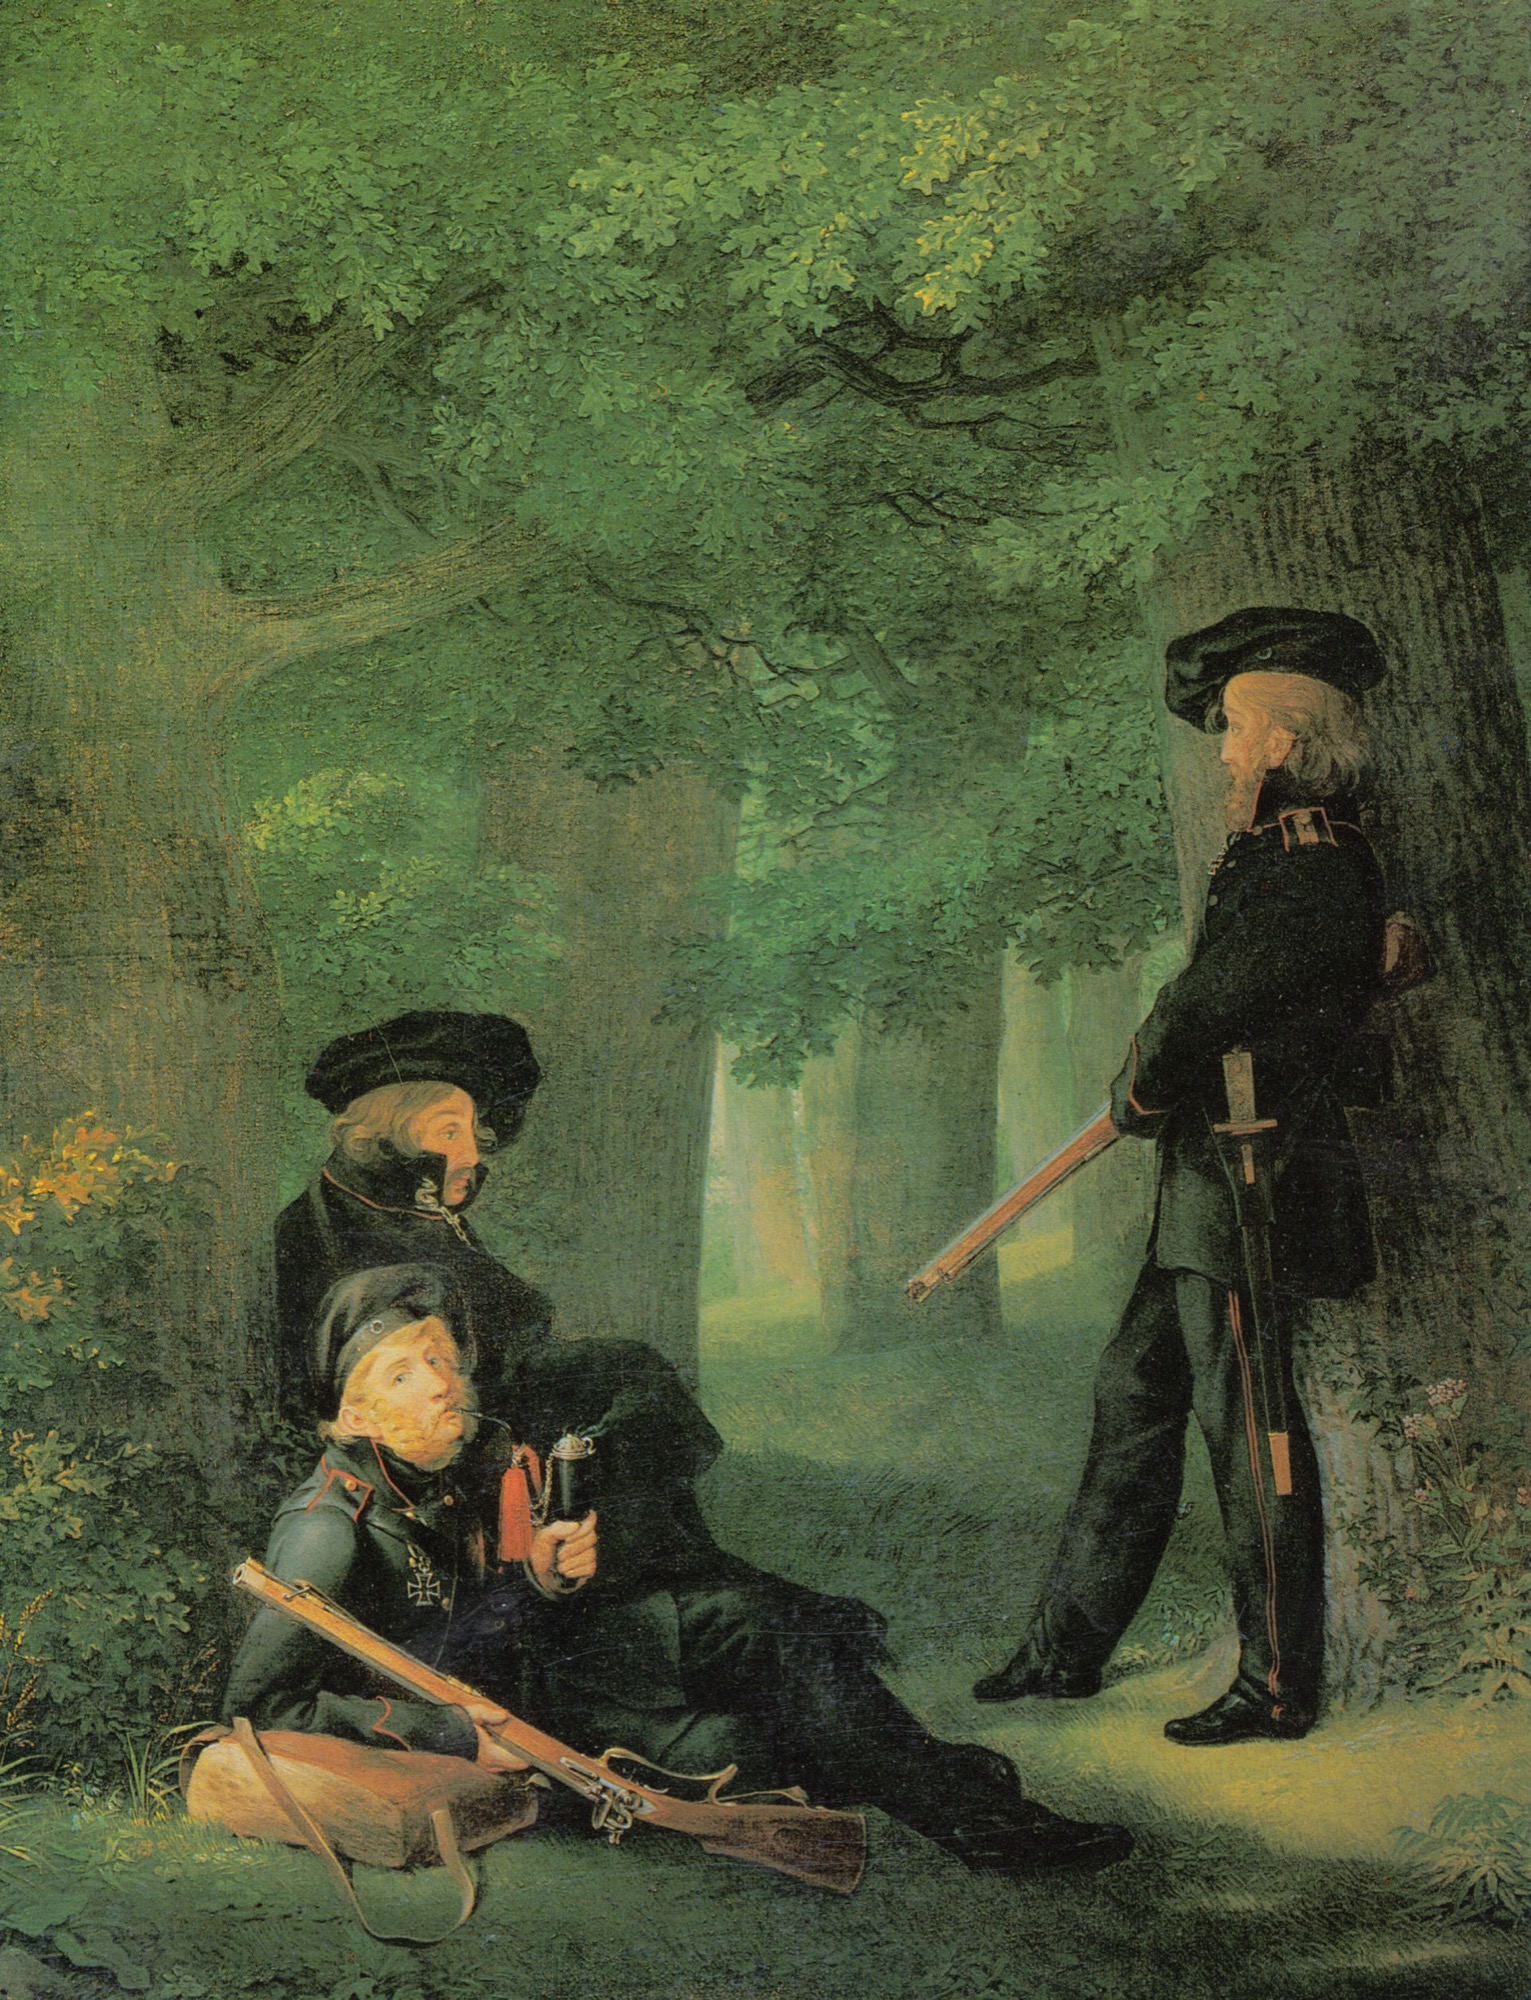 Georg Friedrich Kersting, <em>Auf Vorposten (On Sentry Duty / At the Outpost)</em>, 1815, oil on canvas, 46 x 35 cm, Alte Nationalgalerie, Berlin, Germany. Public Domain.